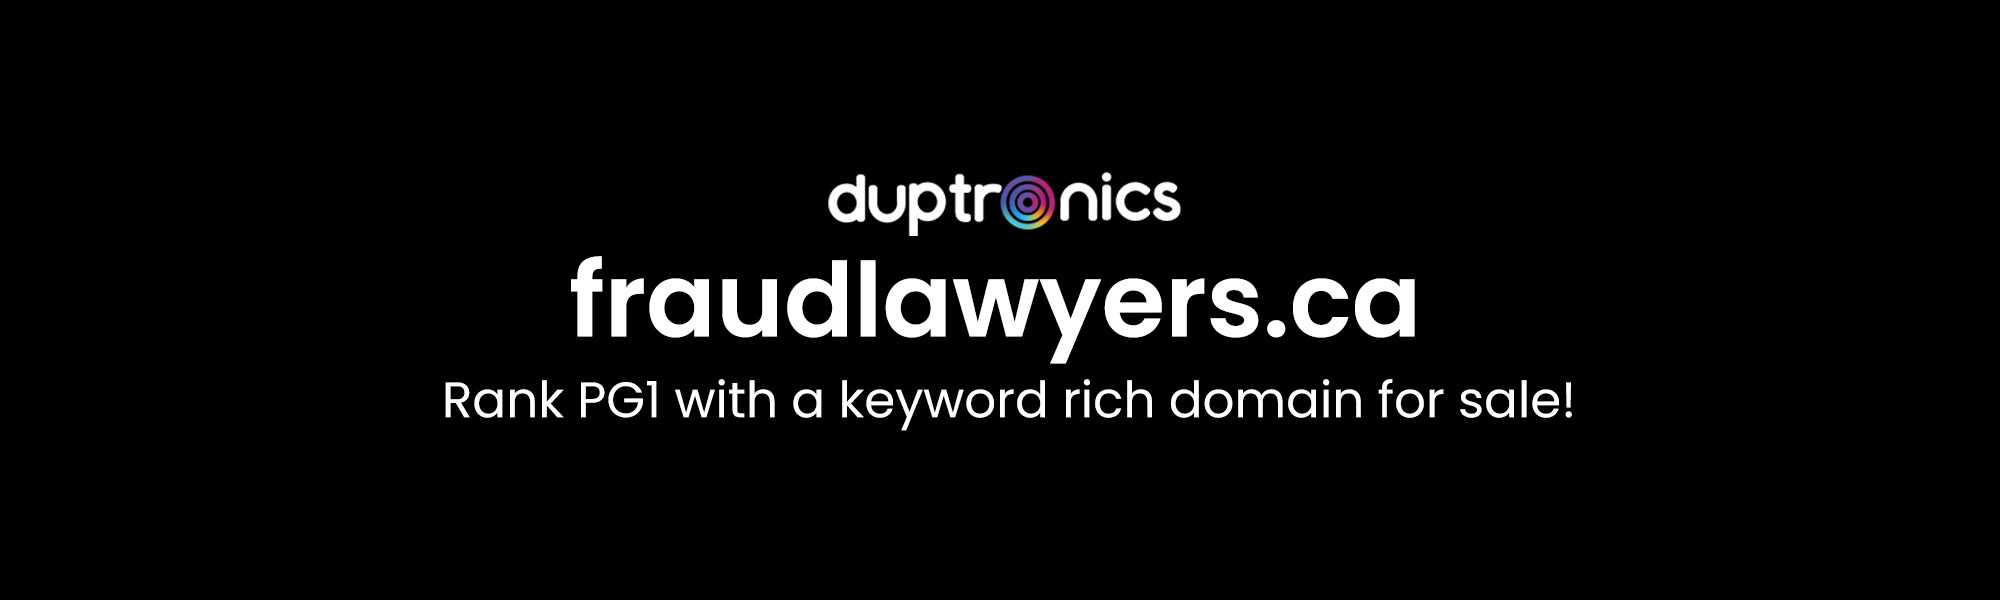 fraud lawyers toronto domain for sale